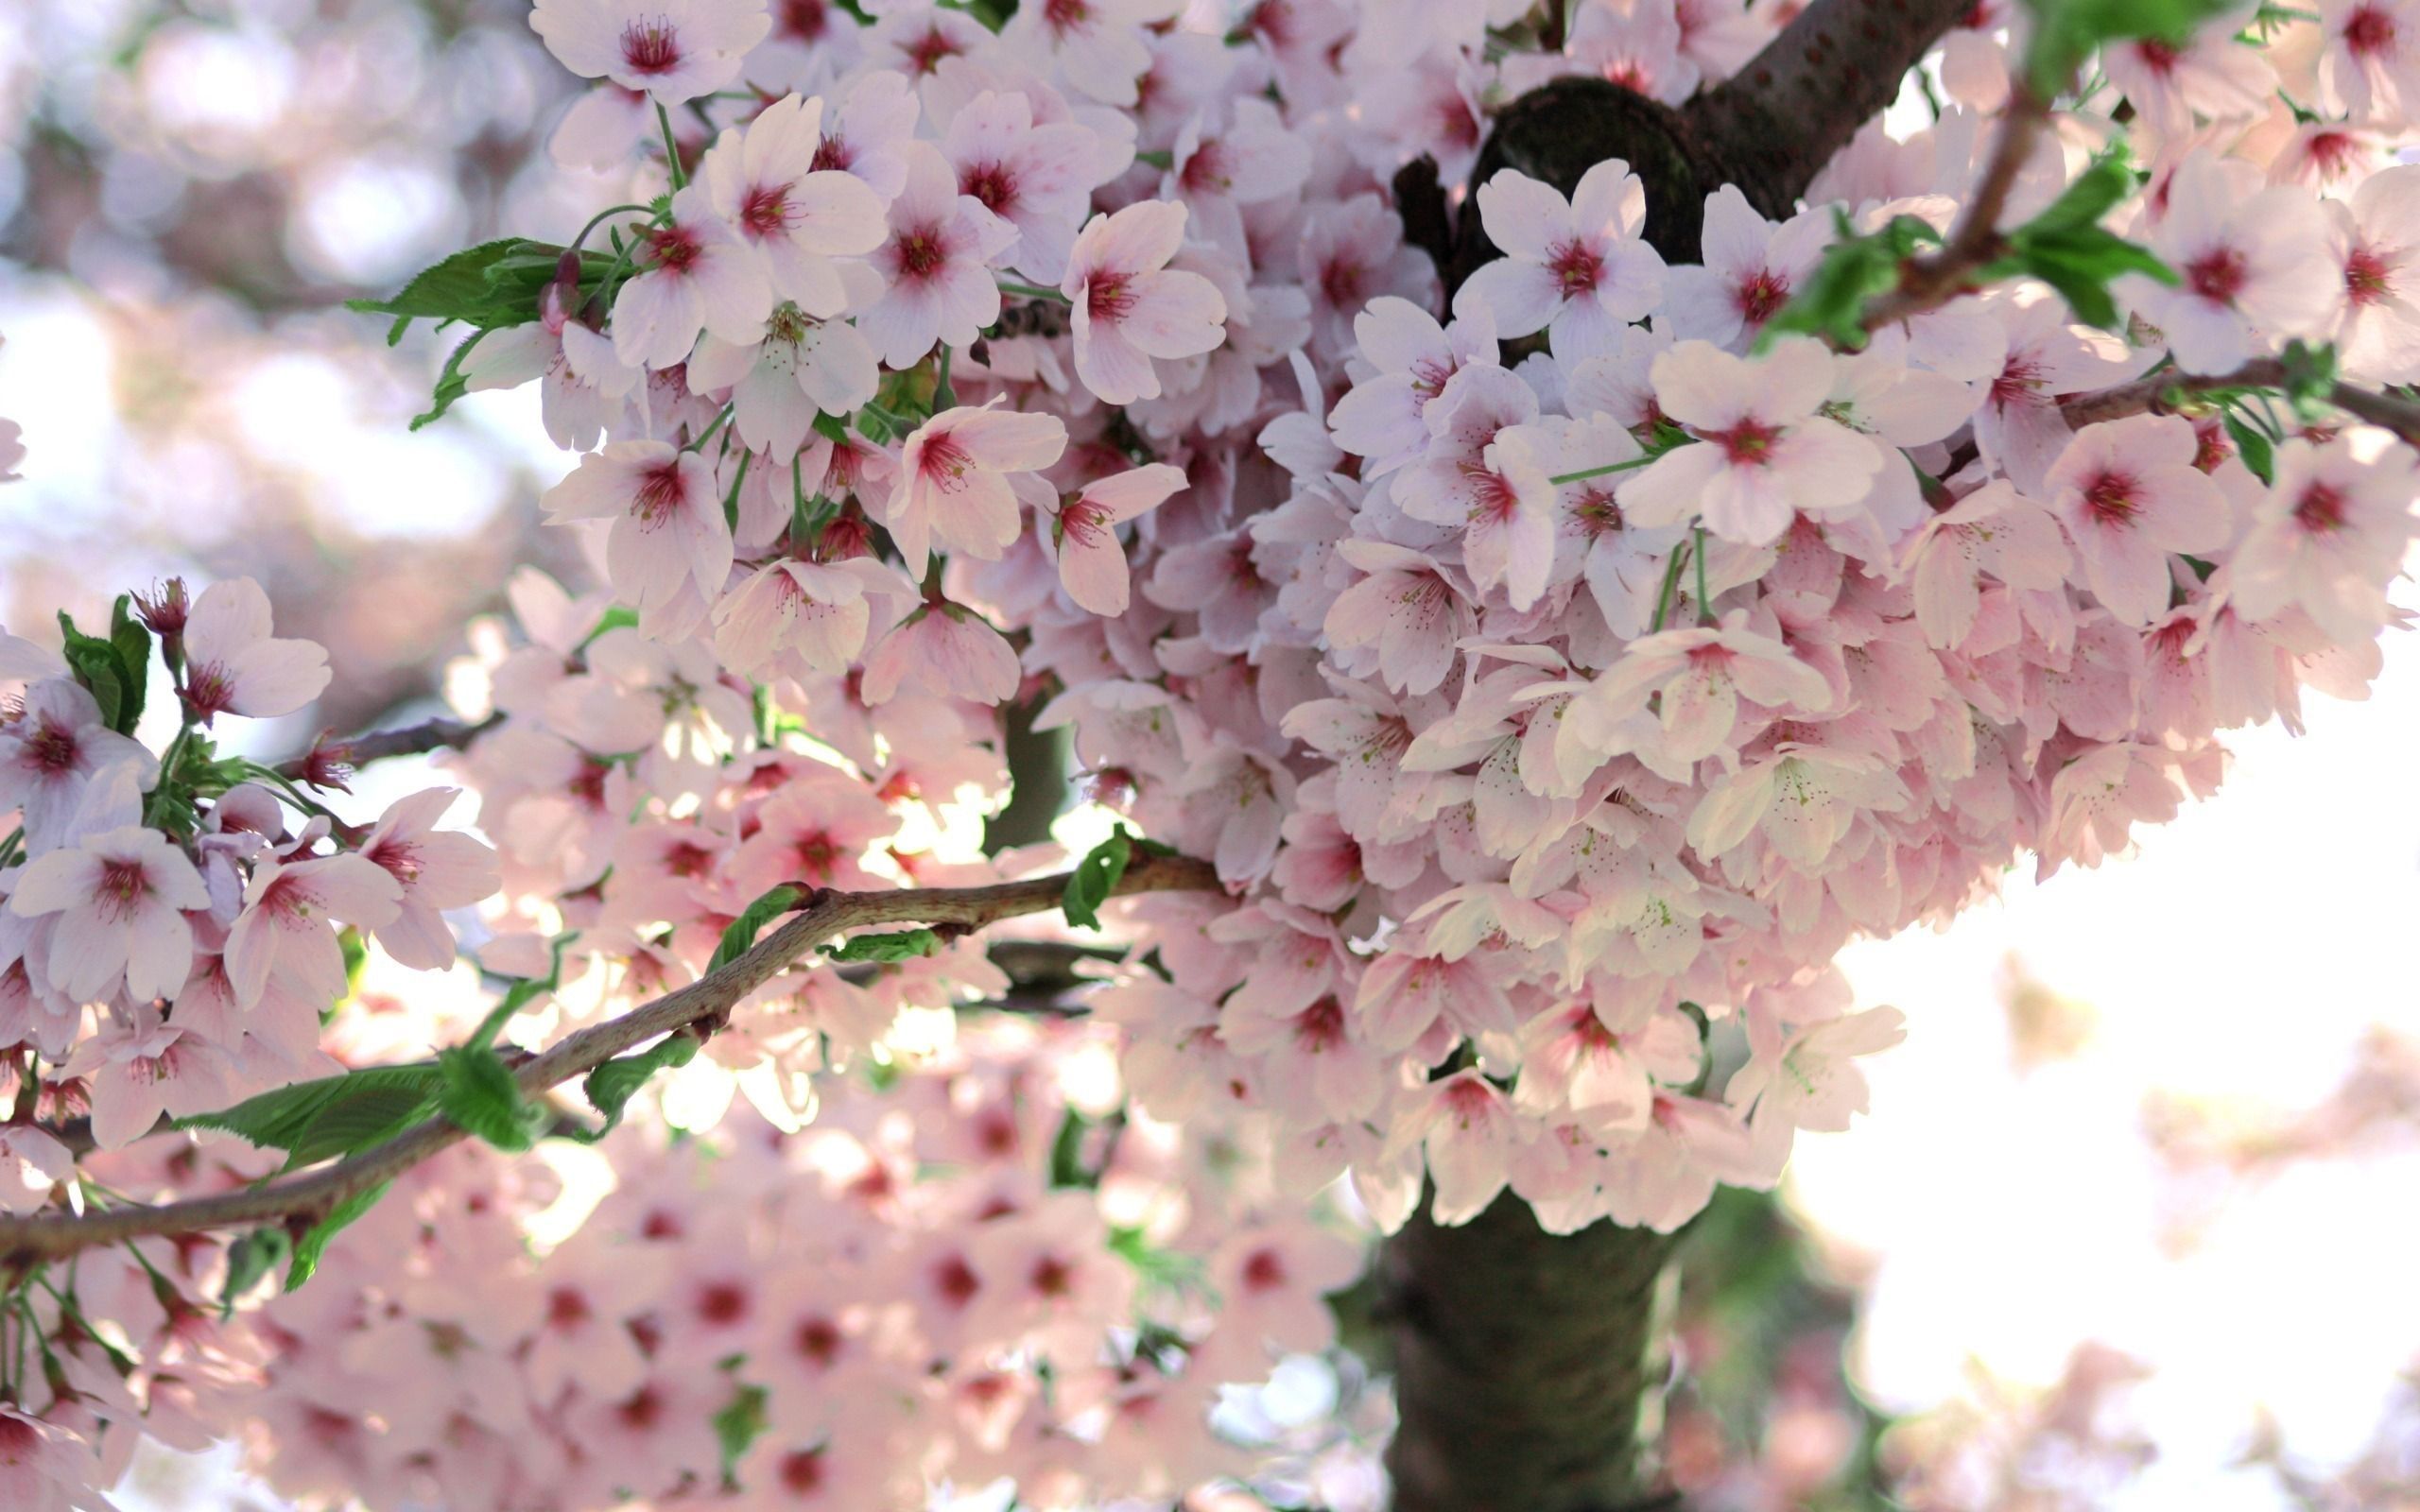 Spring flowers - Spring Wallpaper (22176405) - Fanpop